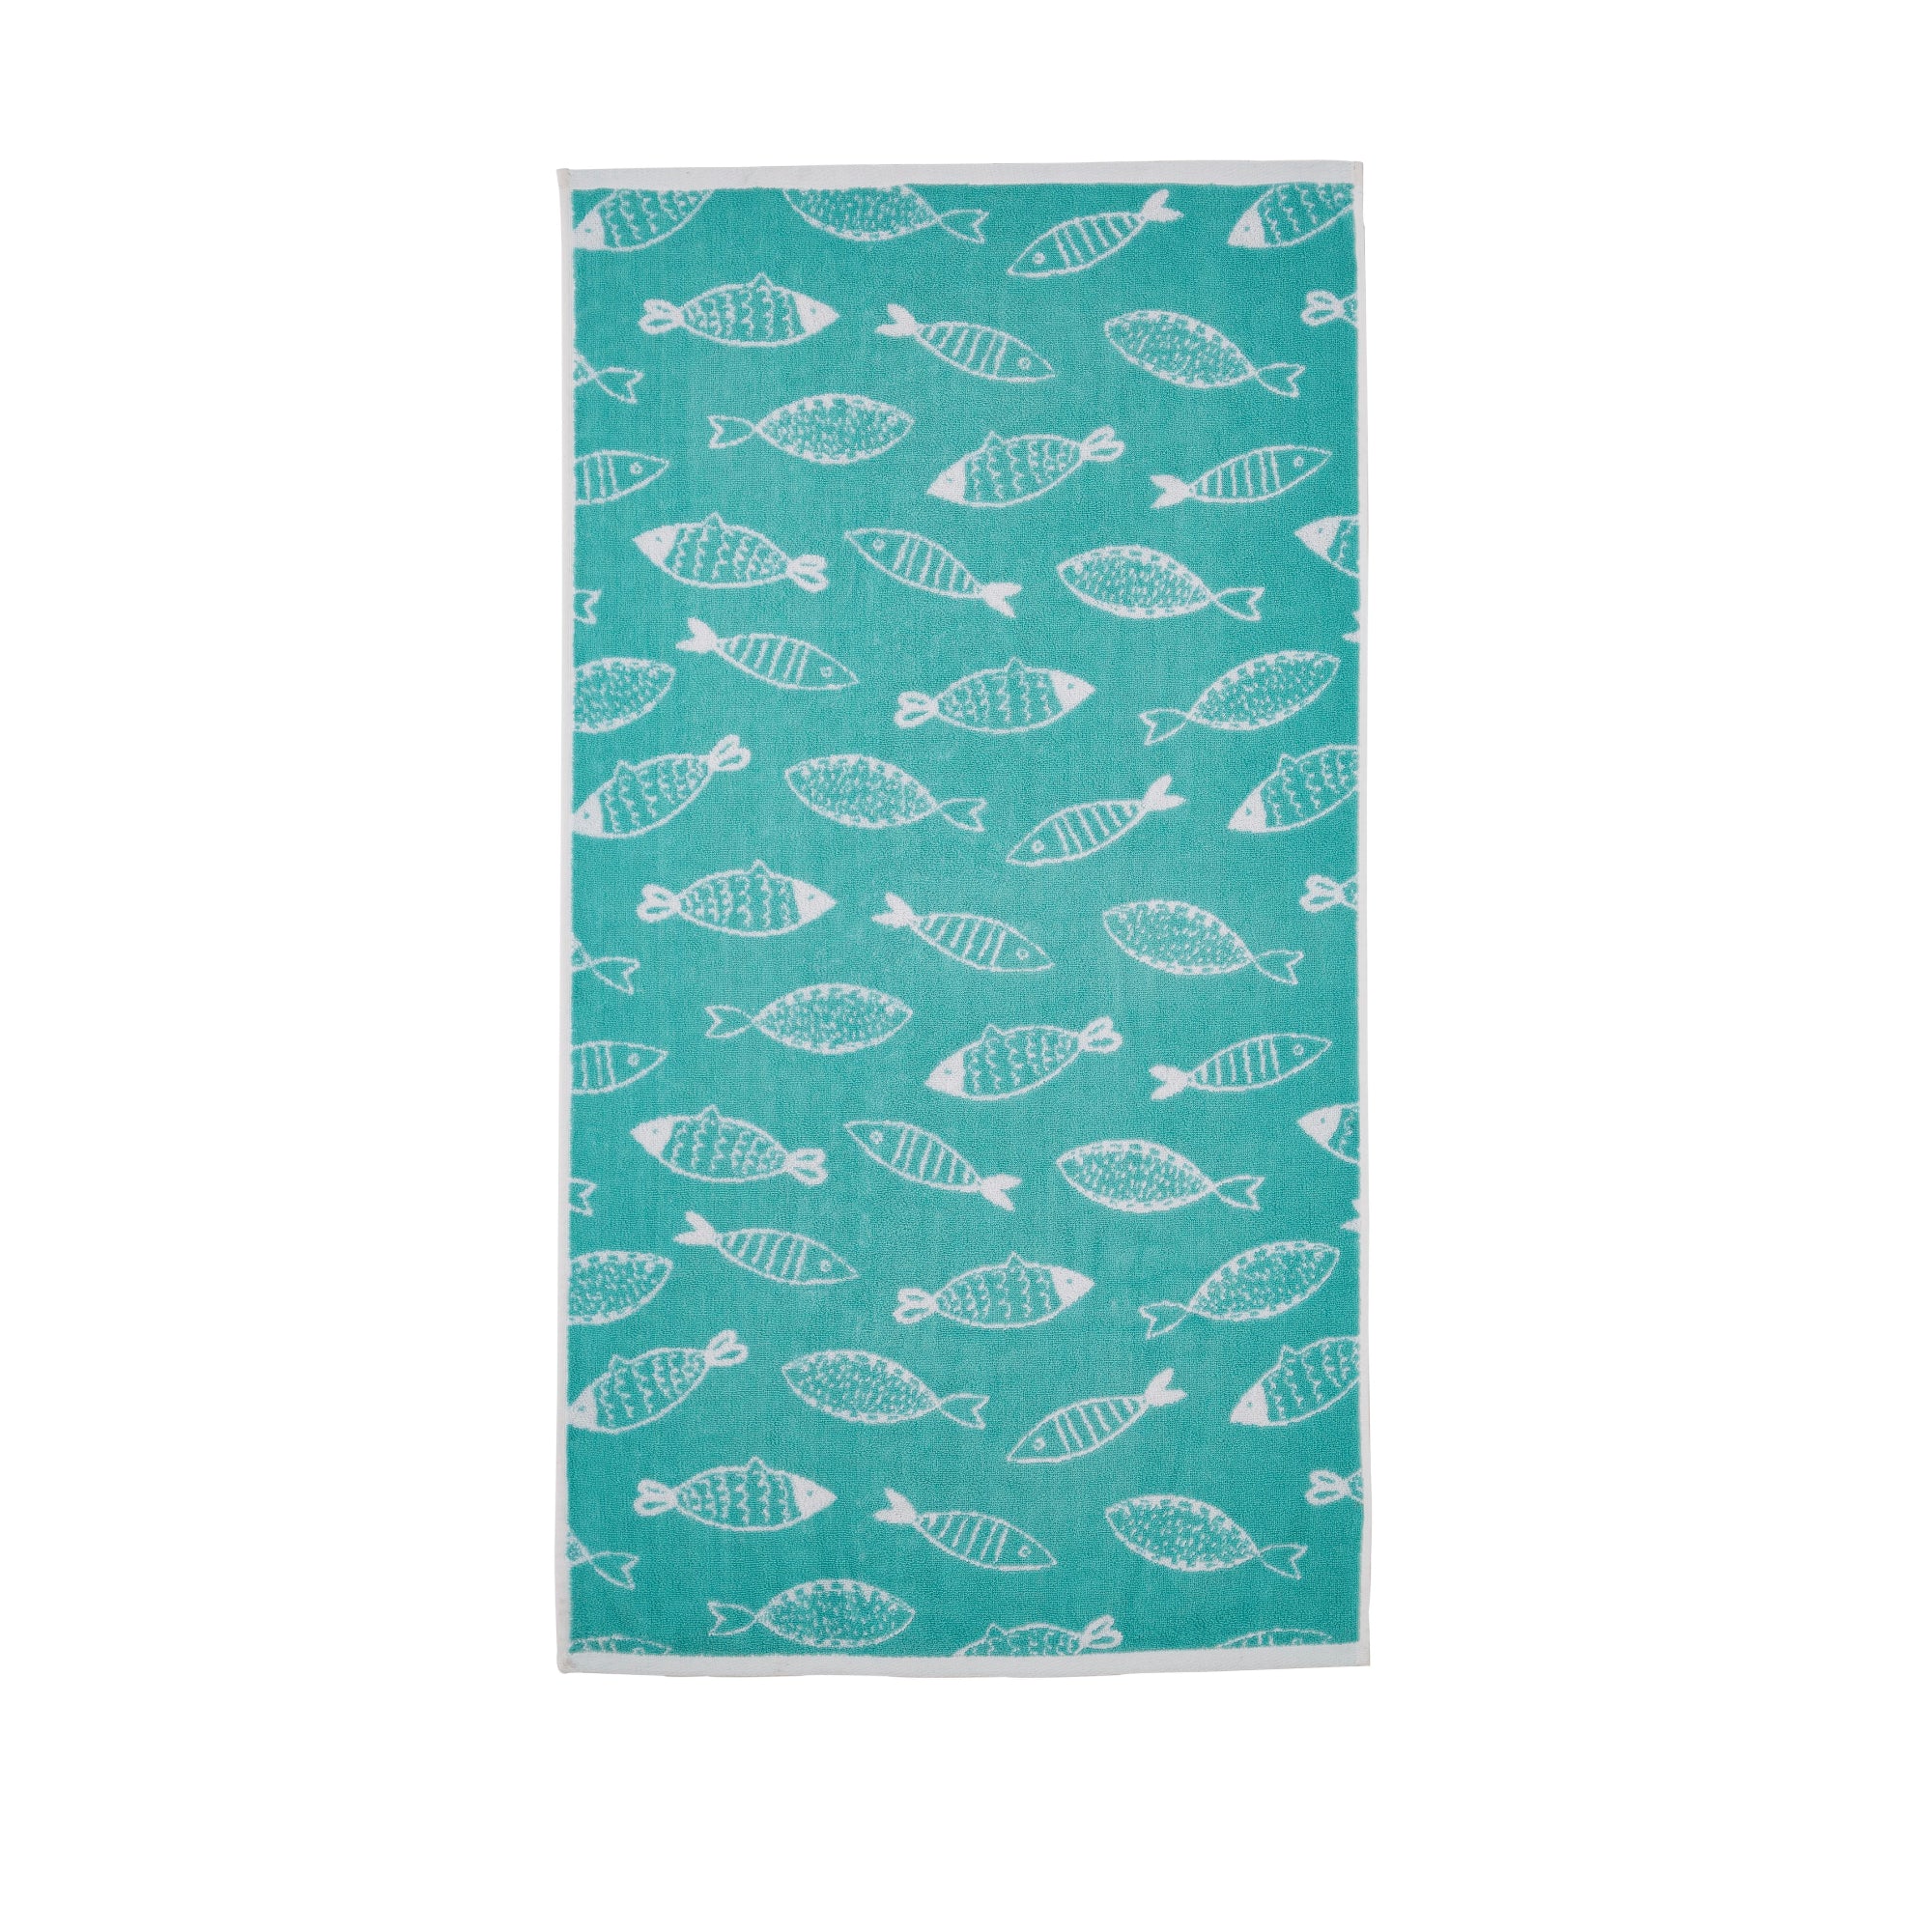 Bath Towel Fish by Fusion in Aqua/White